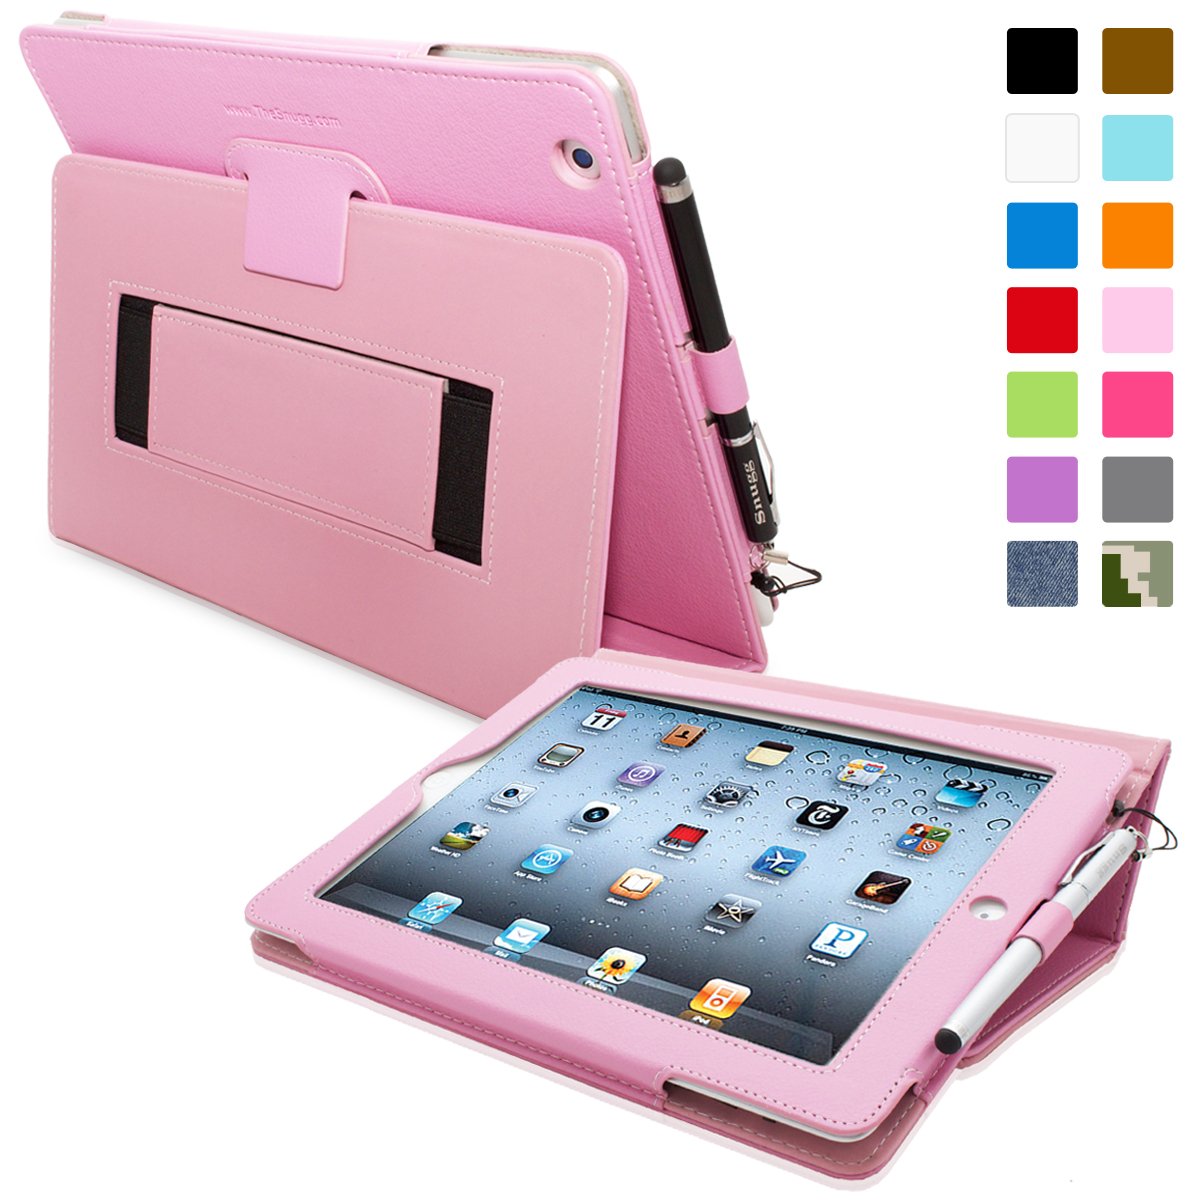 Snugg iPad 2 Hülle (Rosa) - Smart Cover